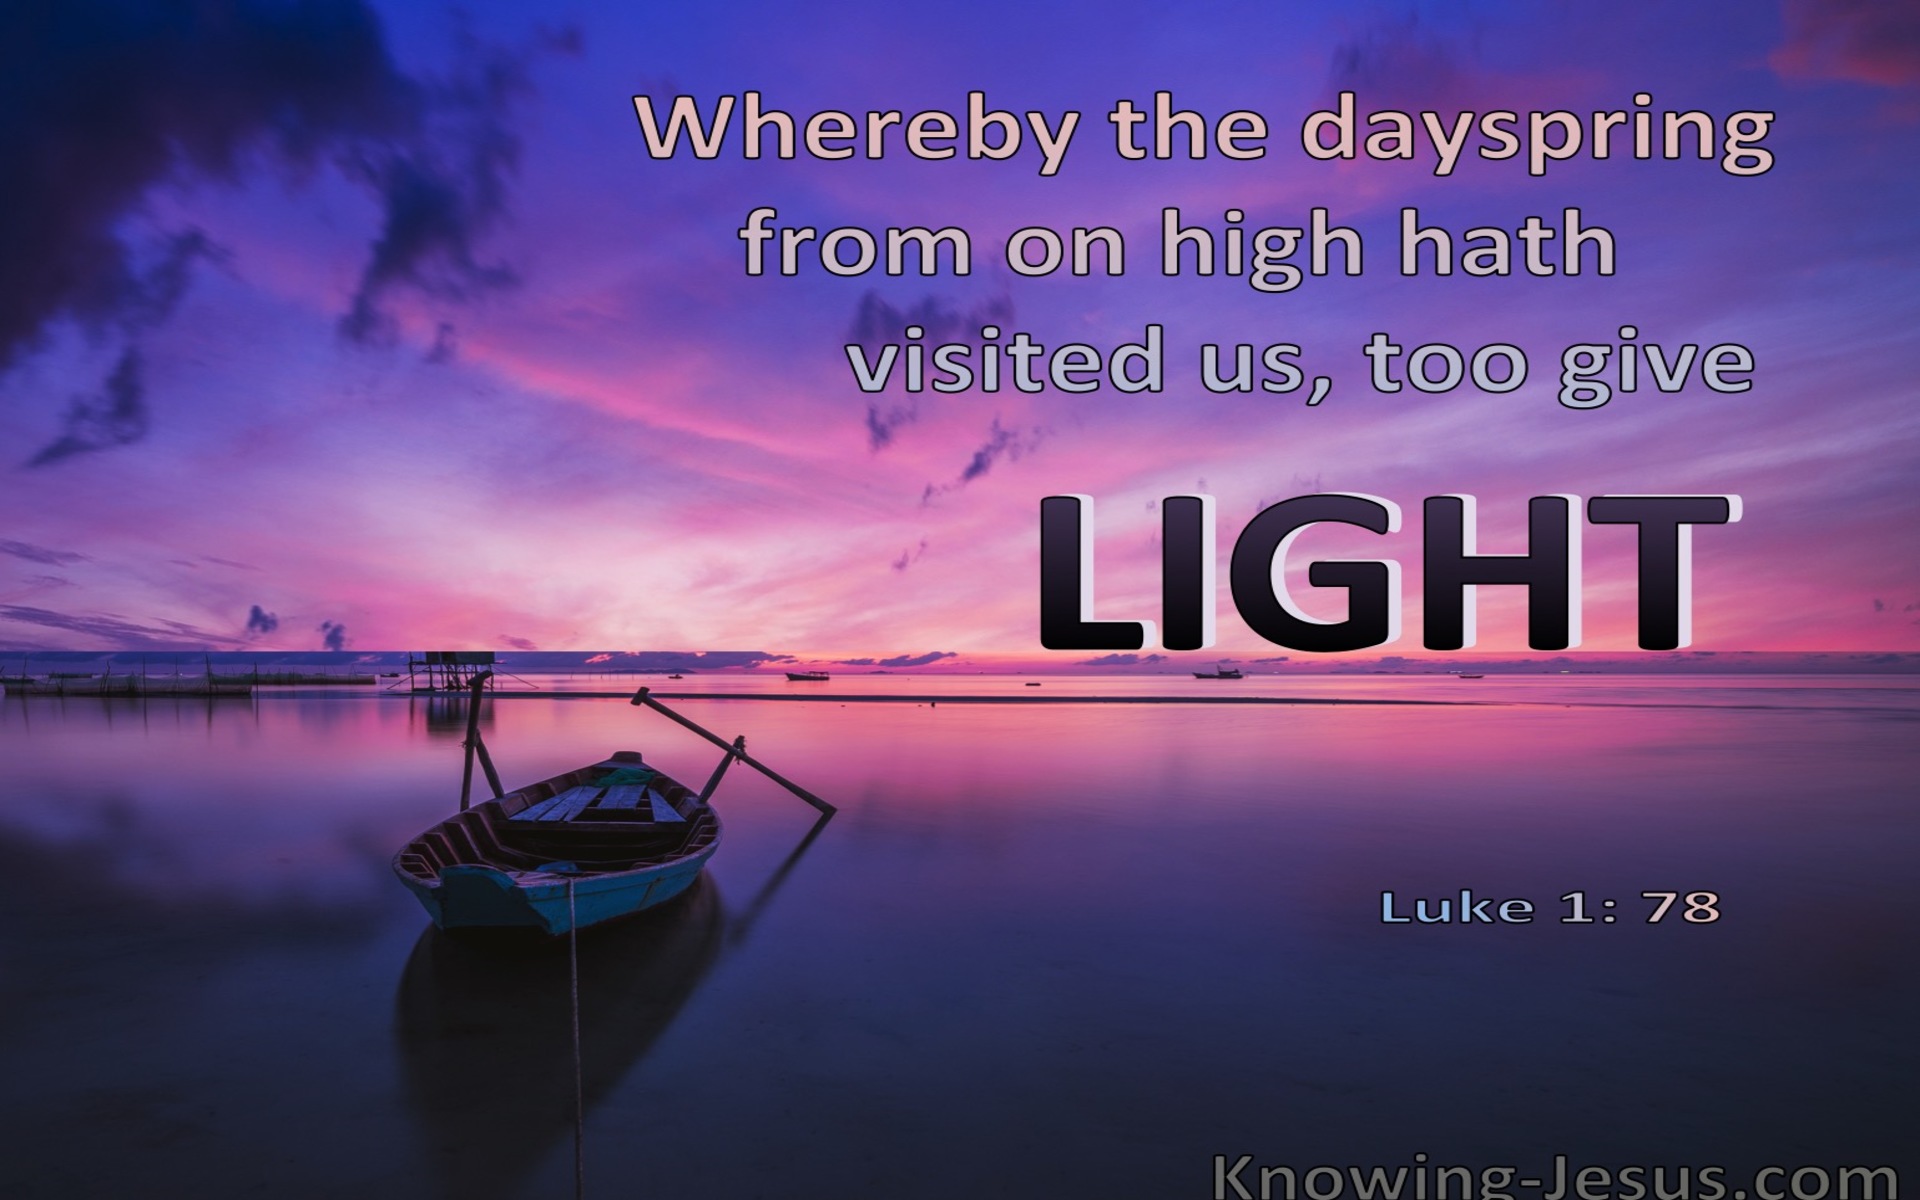 Luke 1:78 The Dayspring Dawning (devotional)06:16 (purple)